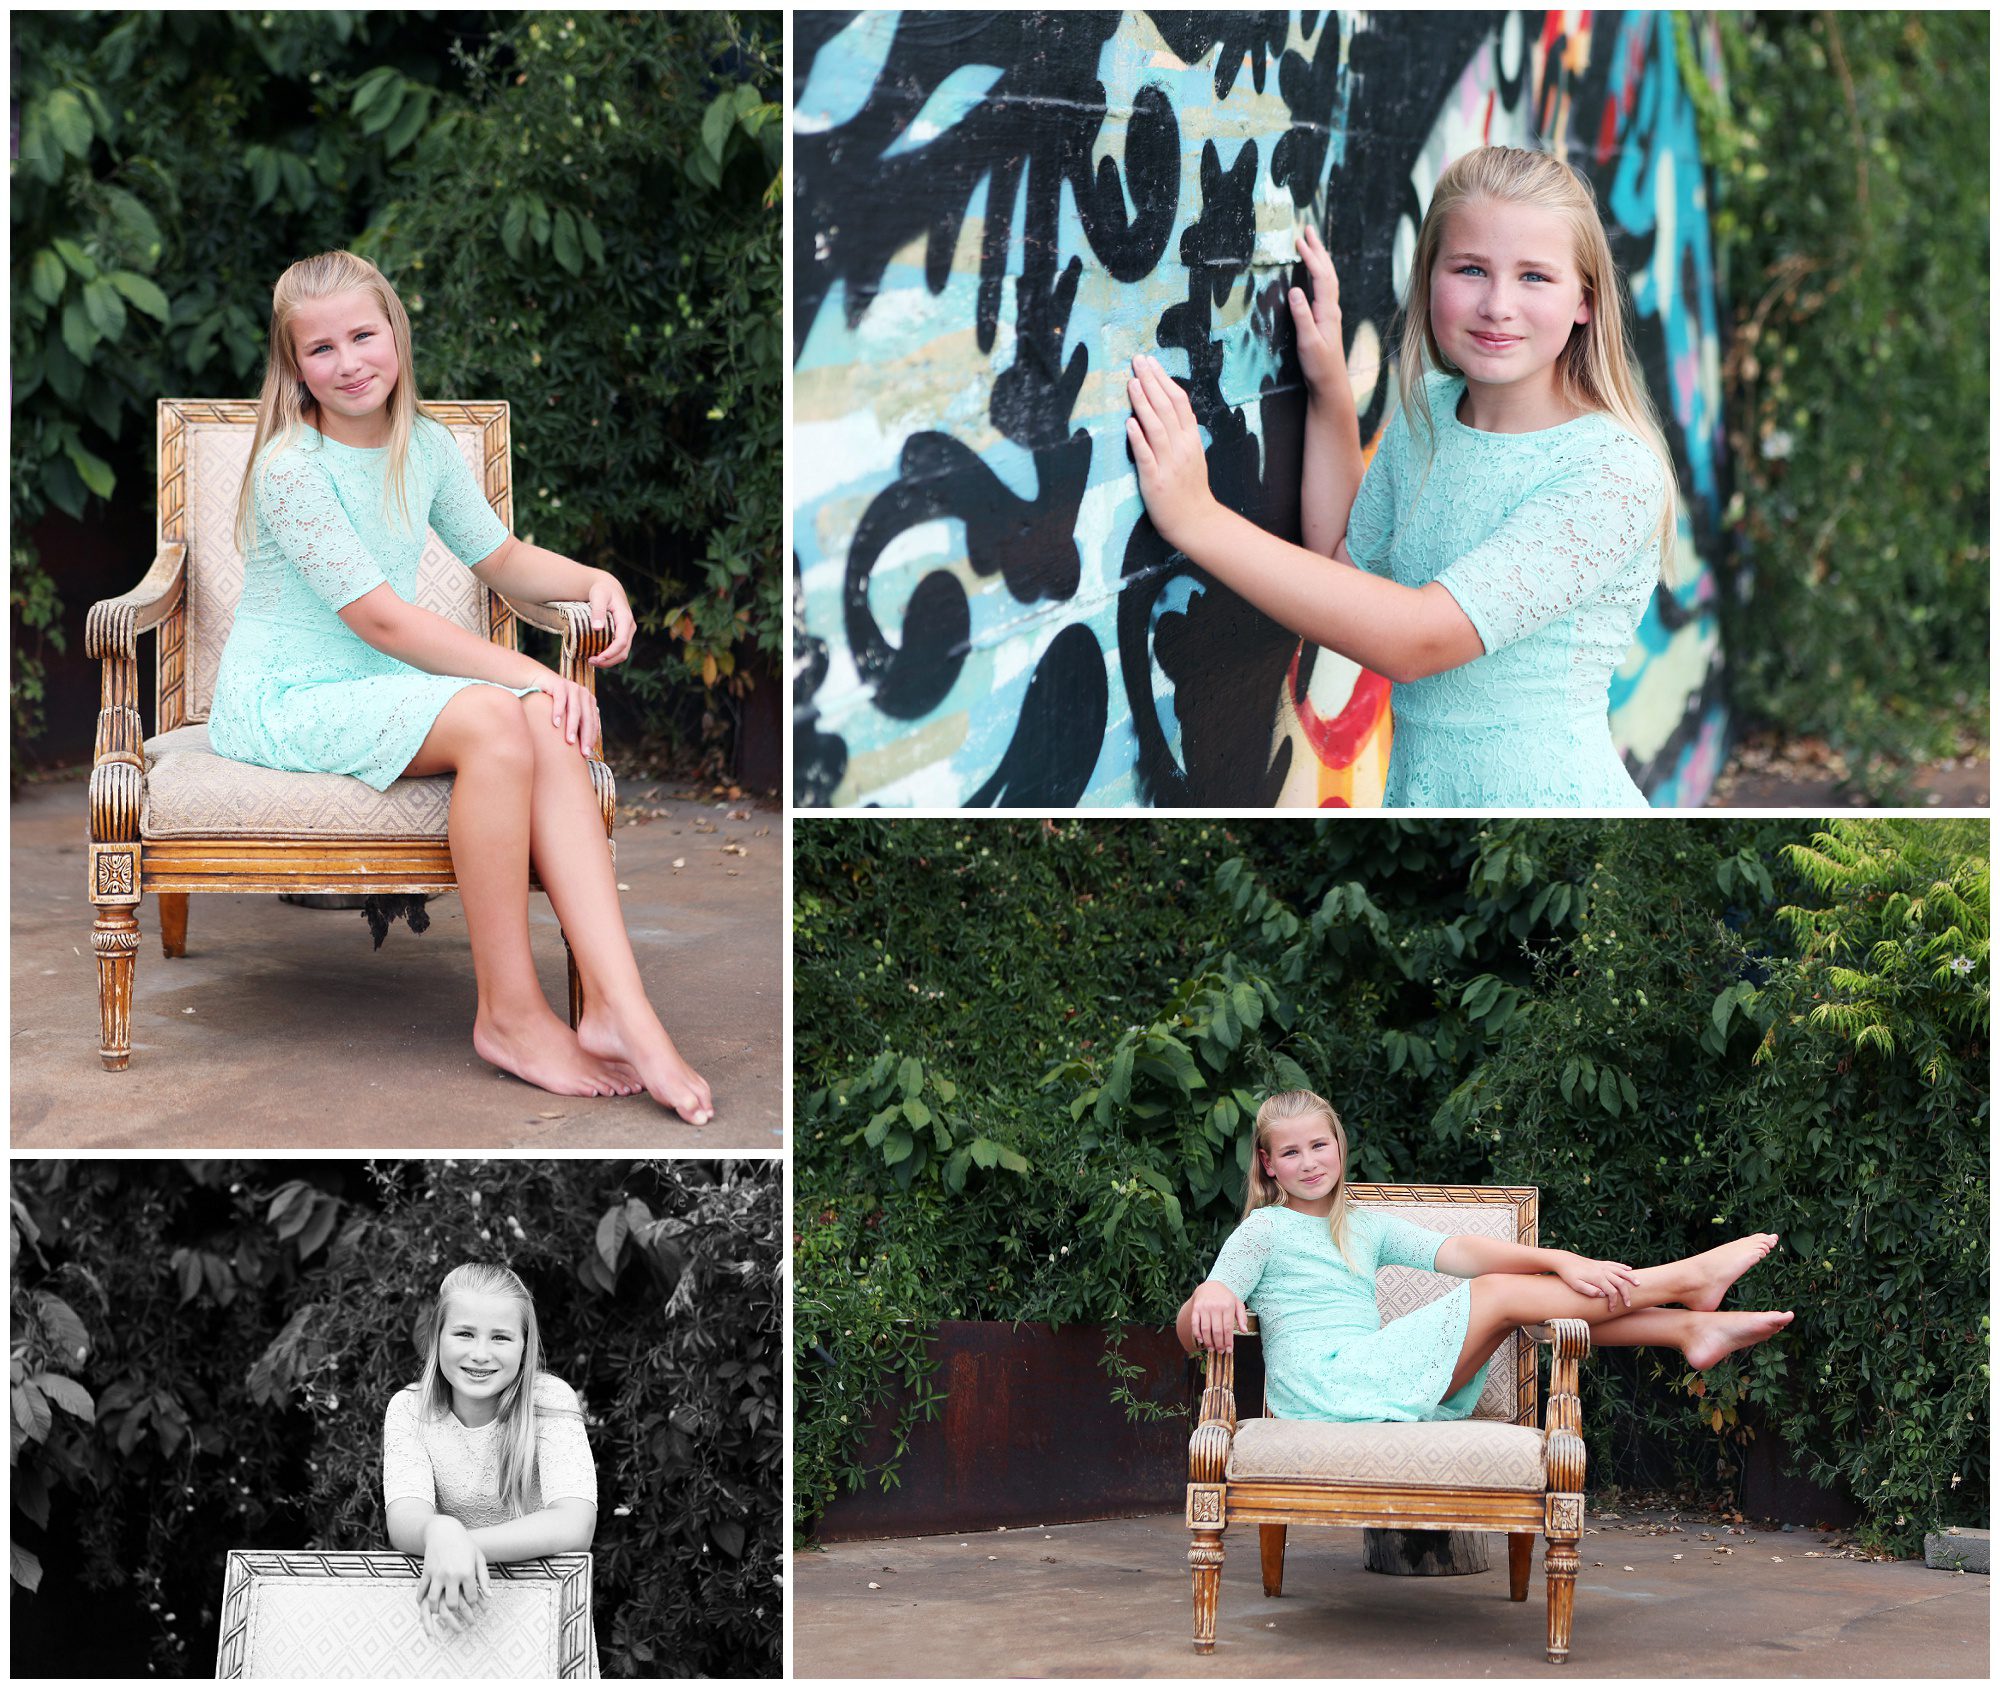 charlottesville portraits teenager art ix park downtown urban summer birthday girl tween braces pictures